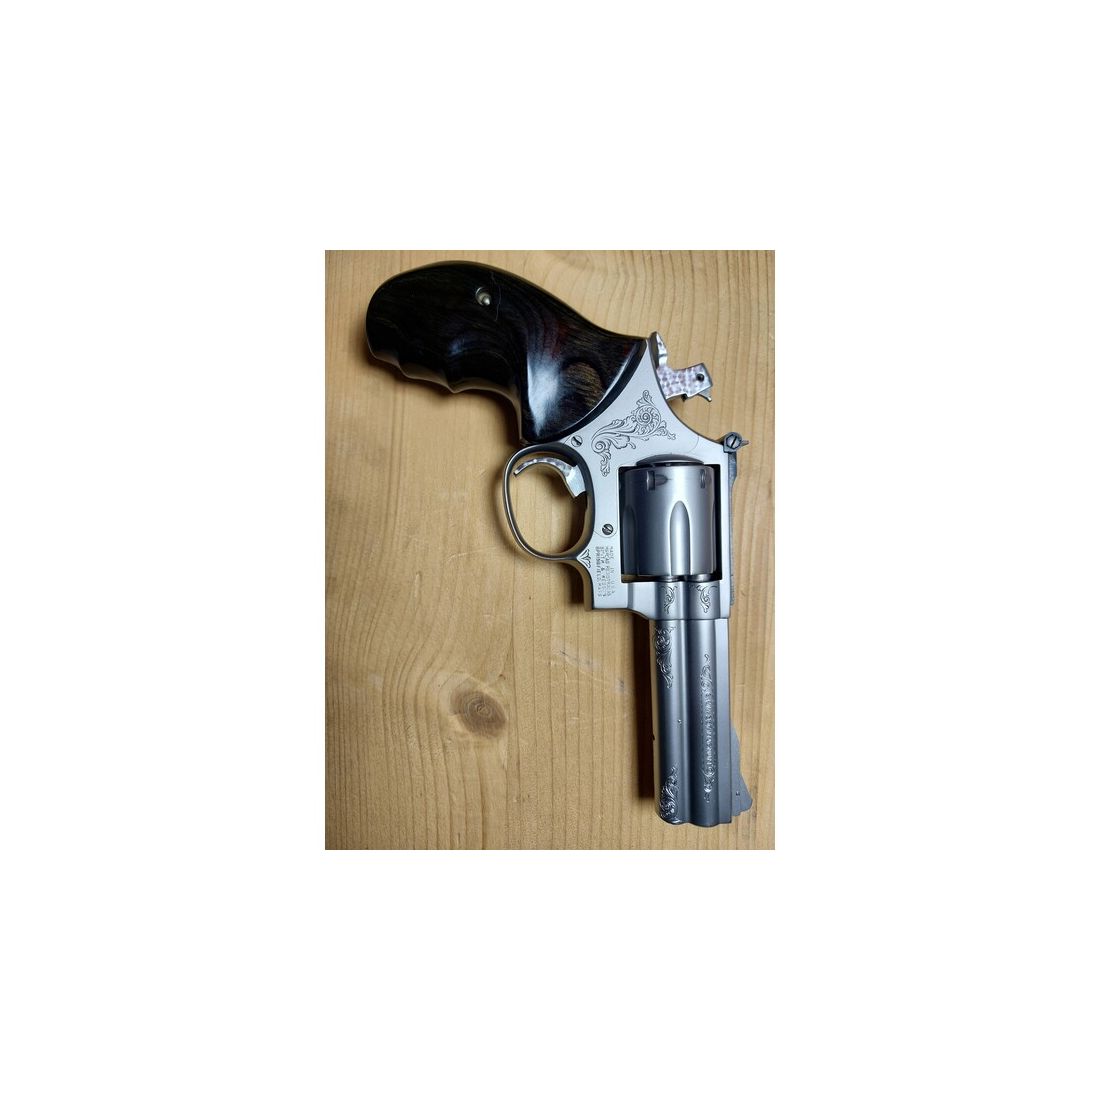 Smith & Wesson 686 .357 Revolver